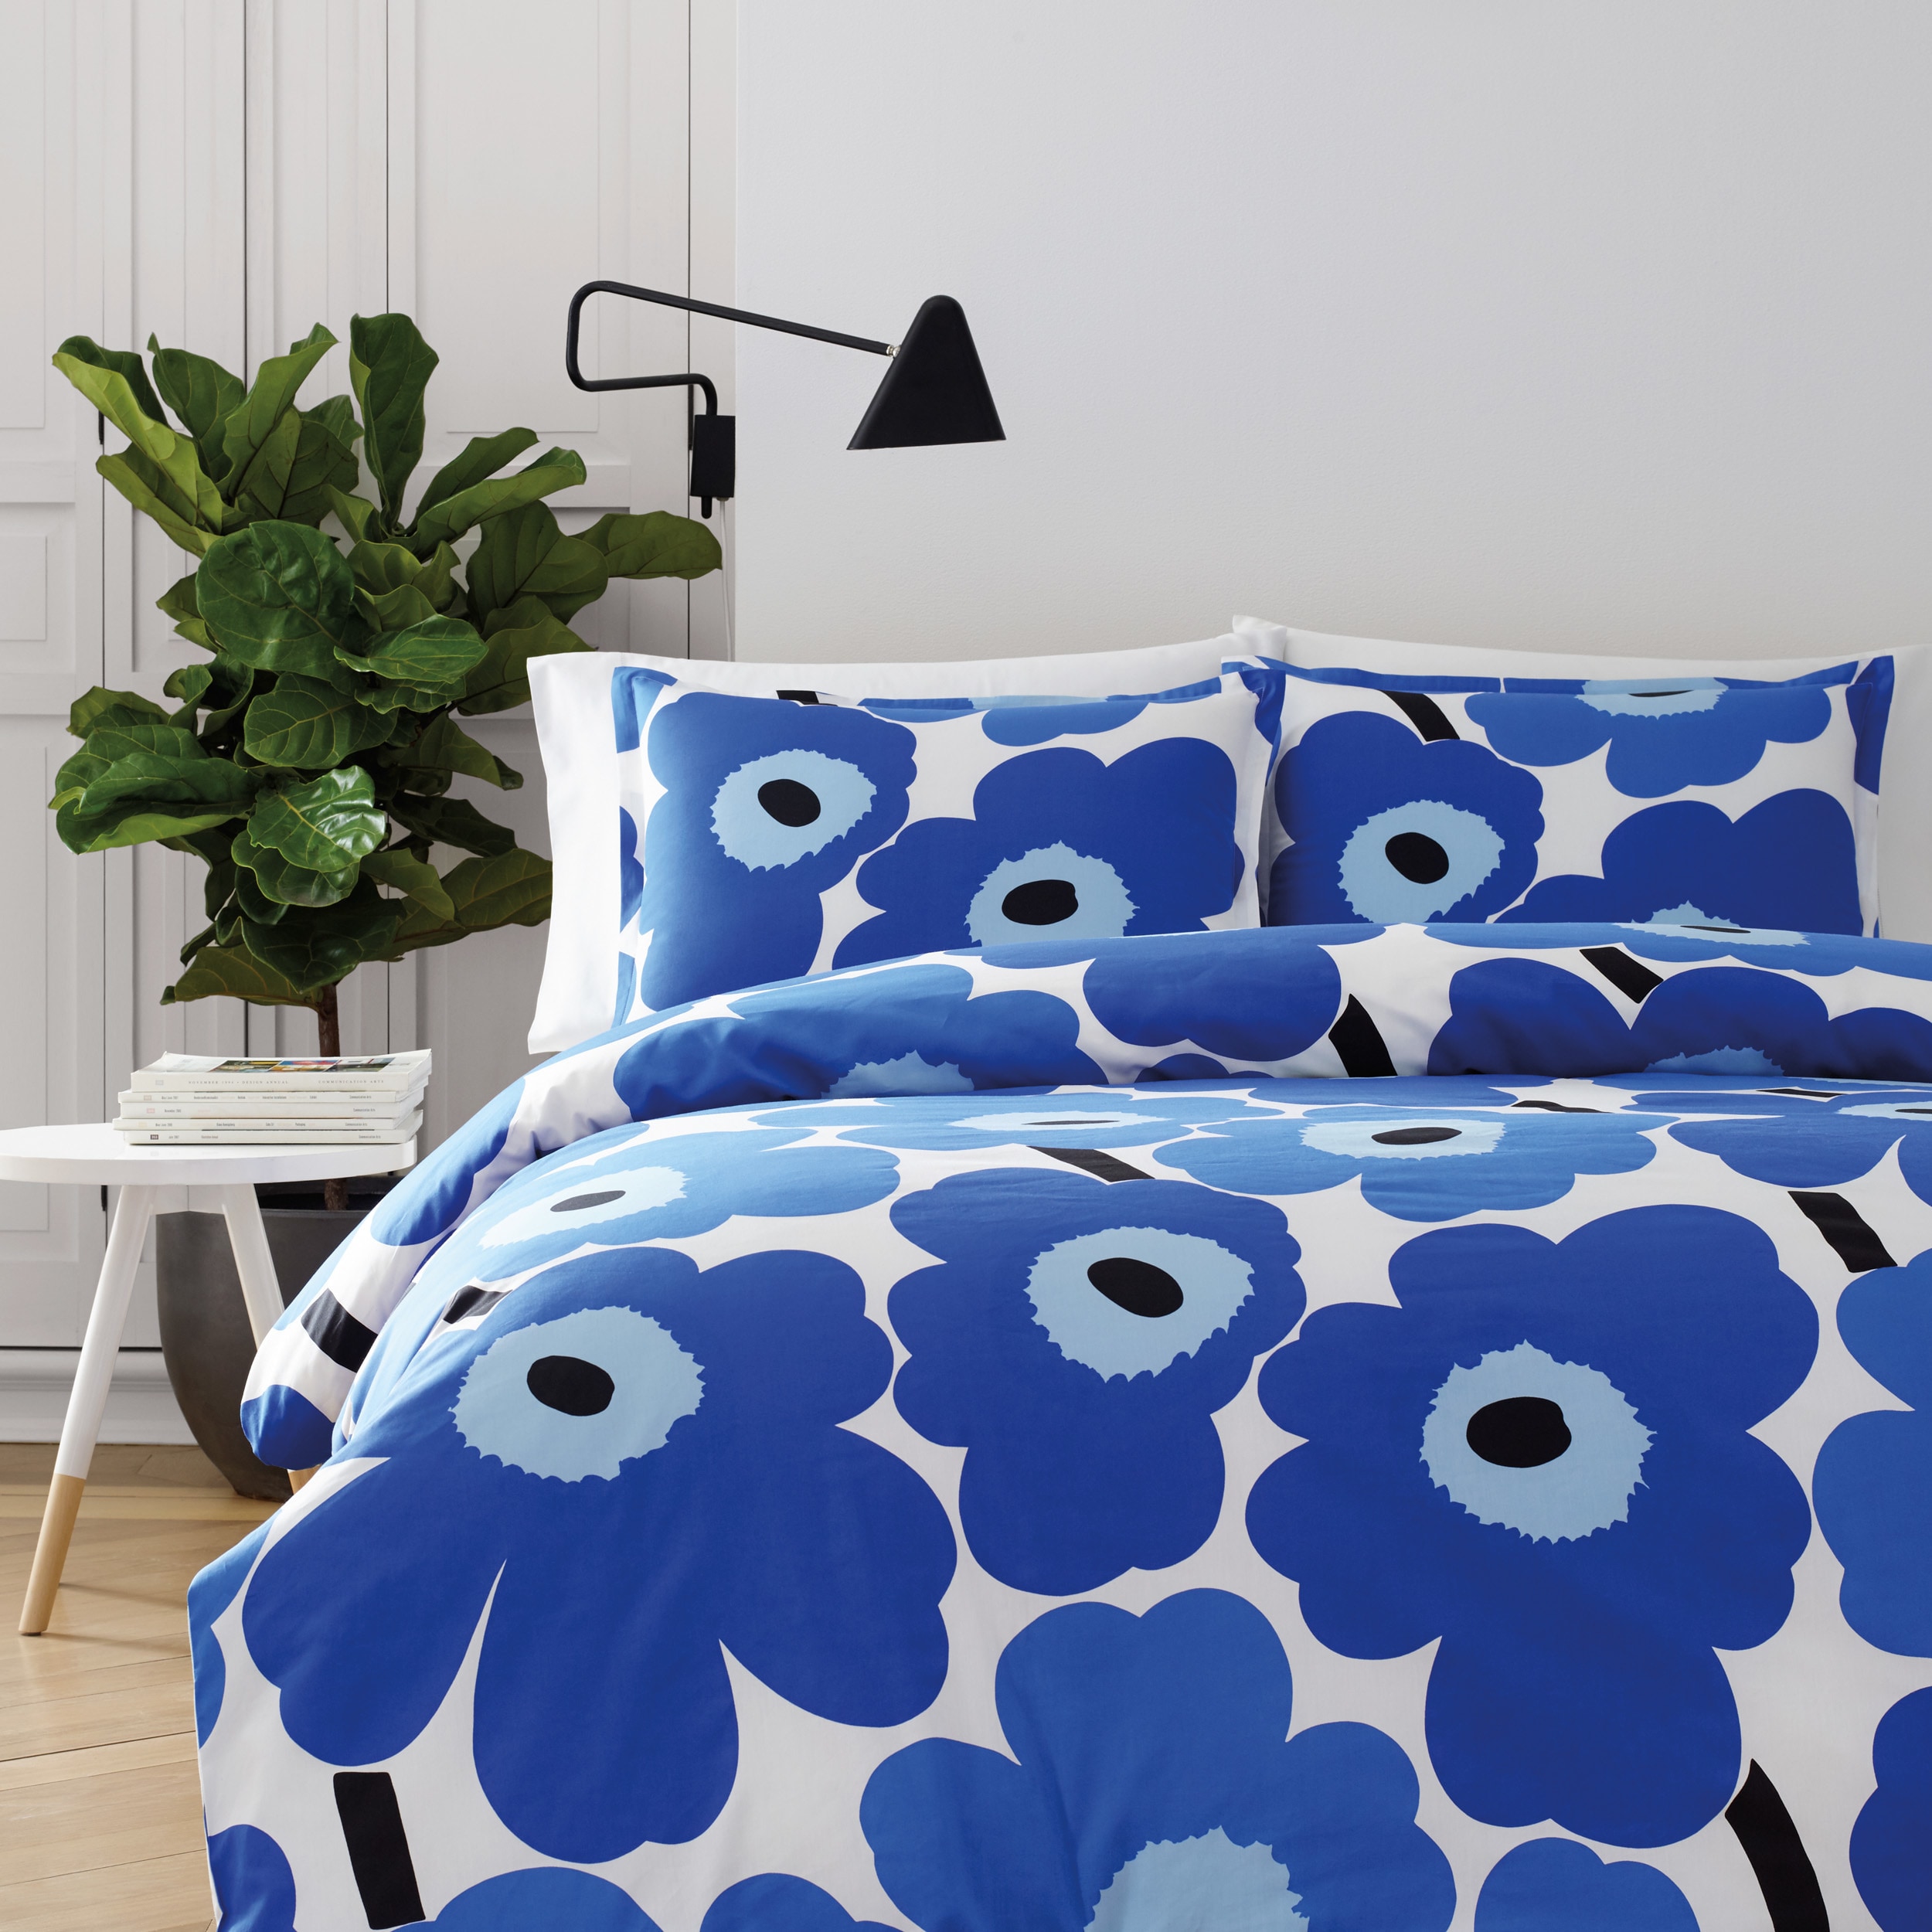 Marimekko Unikko Blue Comforter Set - On Sale - Overstock - 18107081